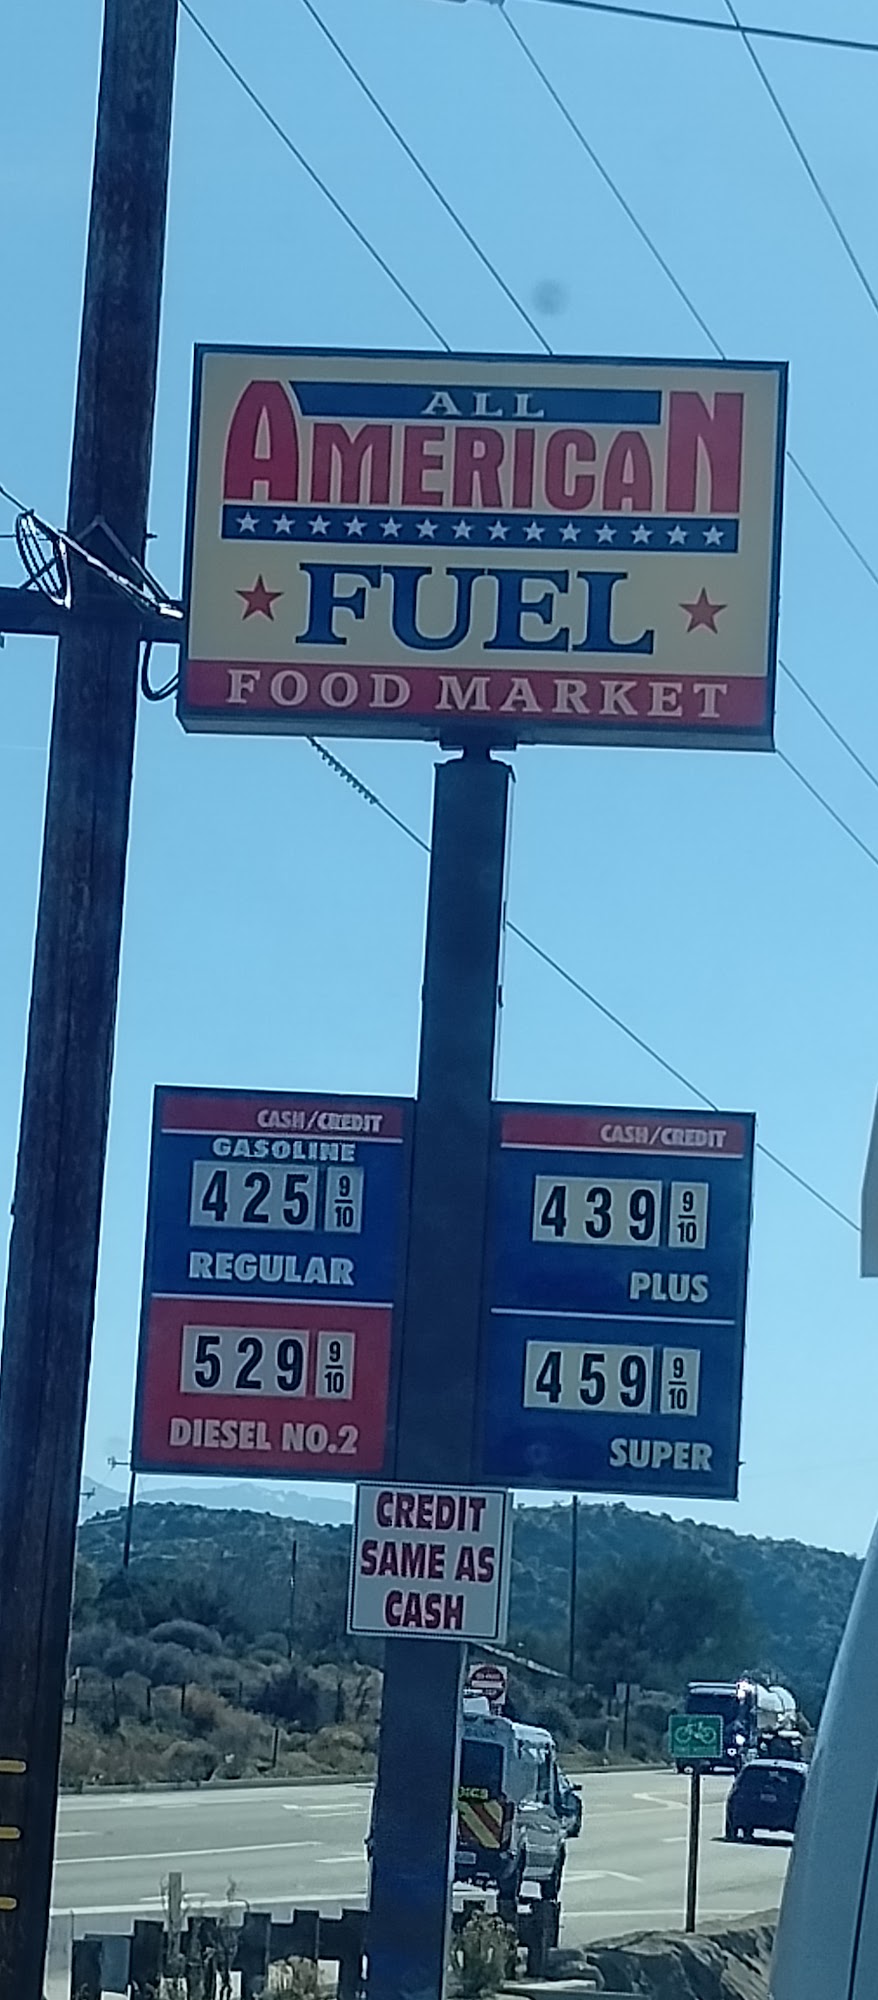 All American Fuel & Food